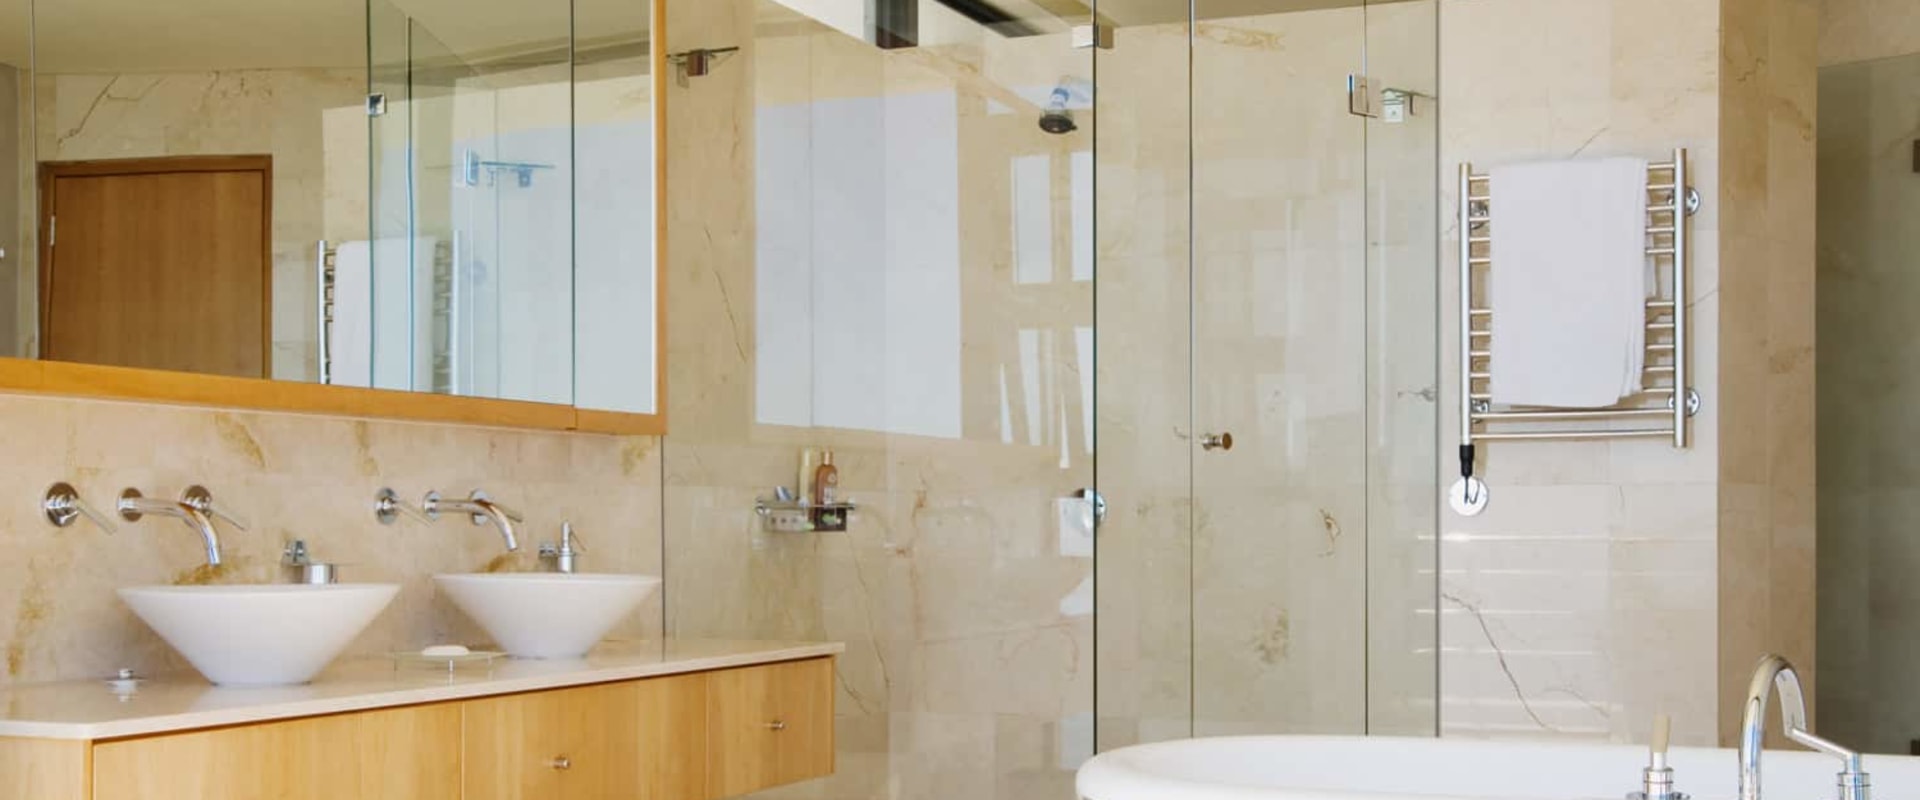 Installing a Shower Door: A Comprehensive DIY Guide